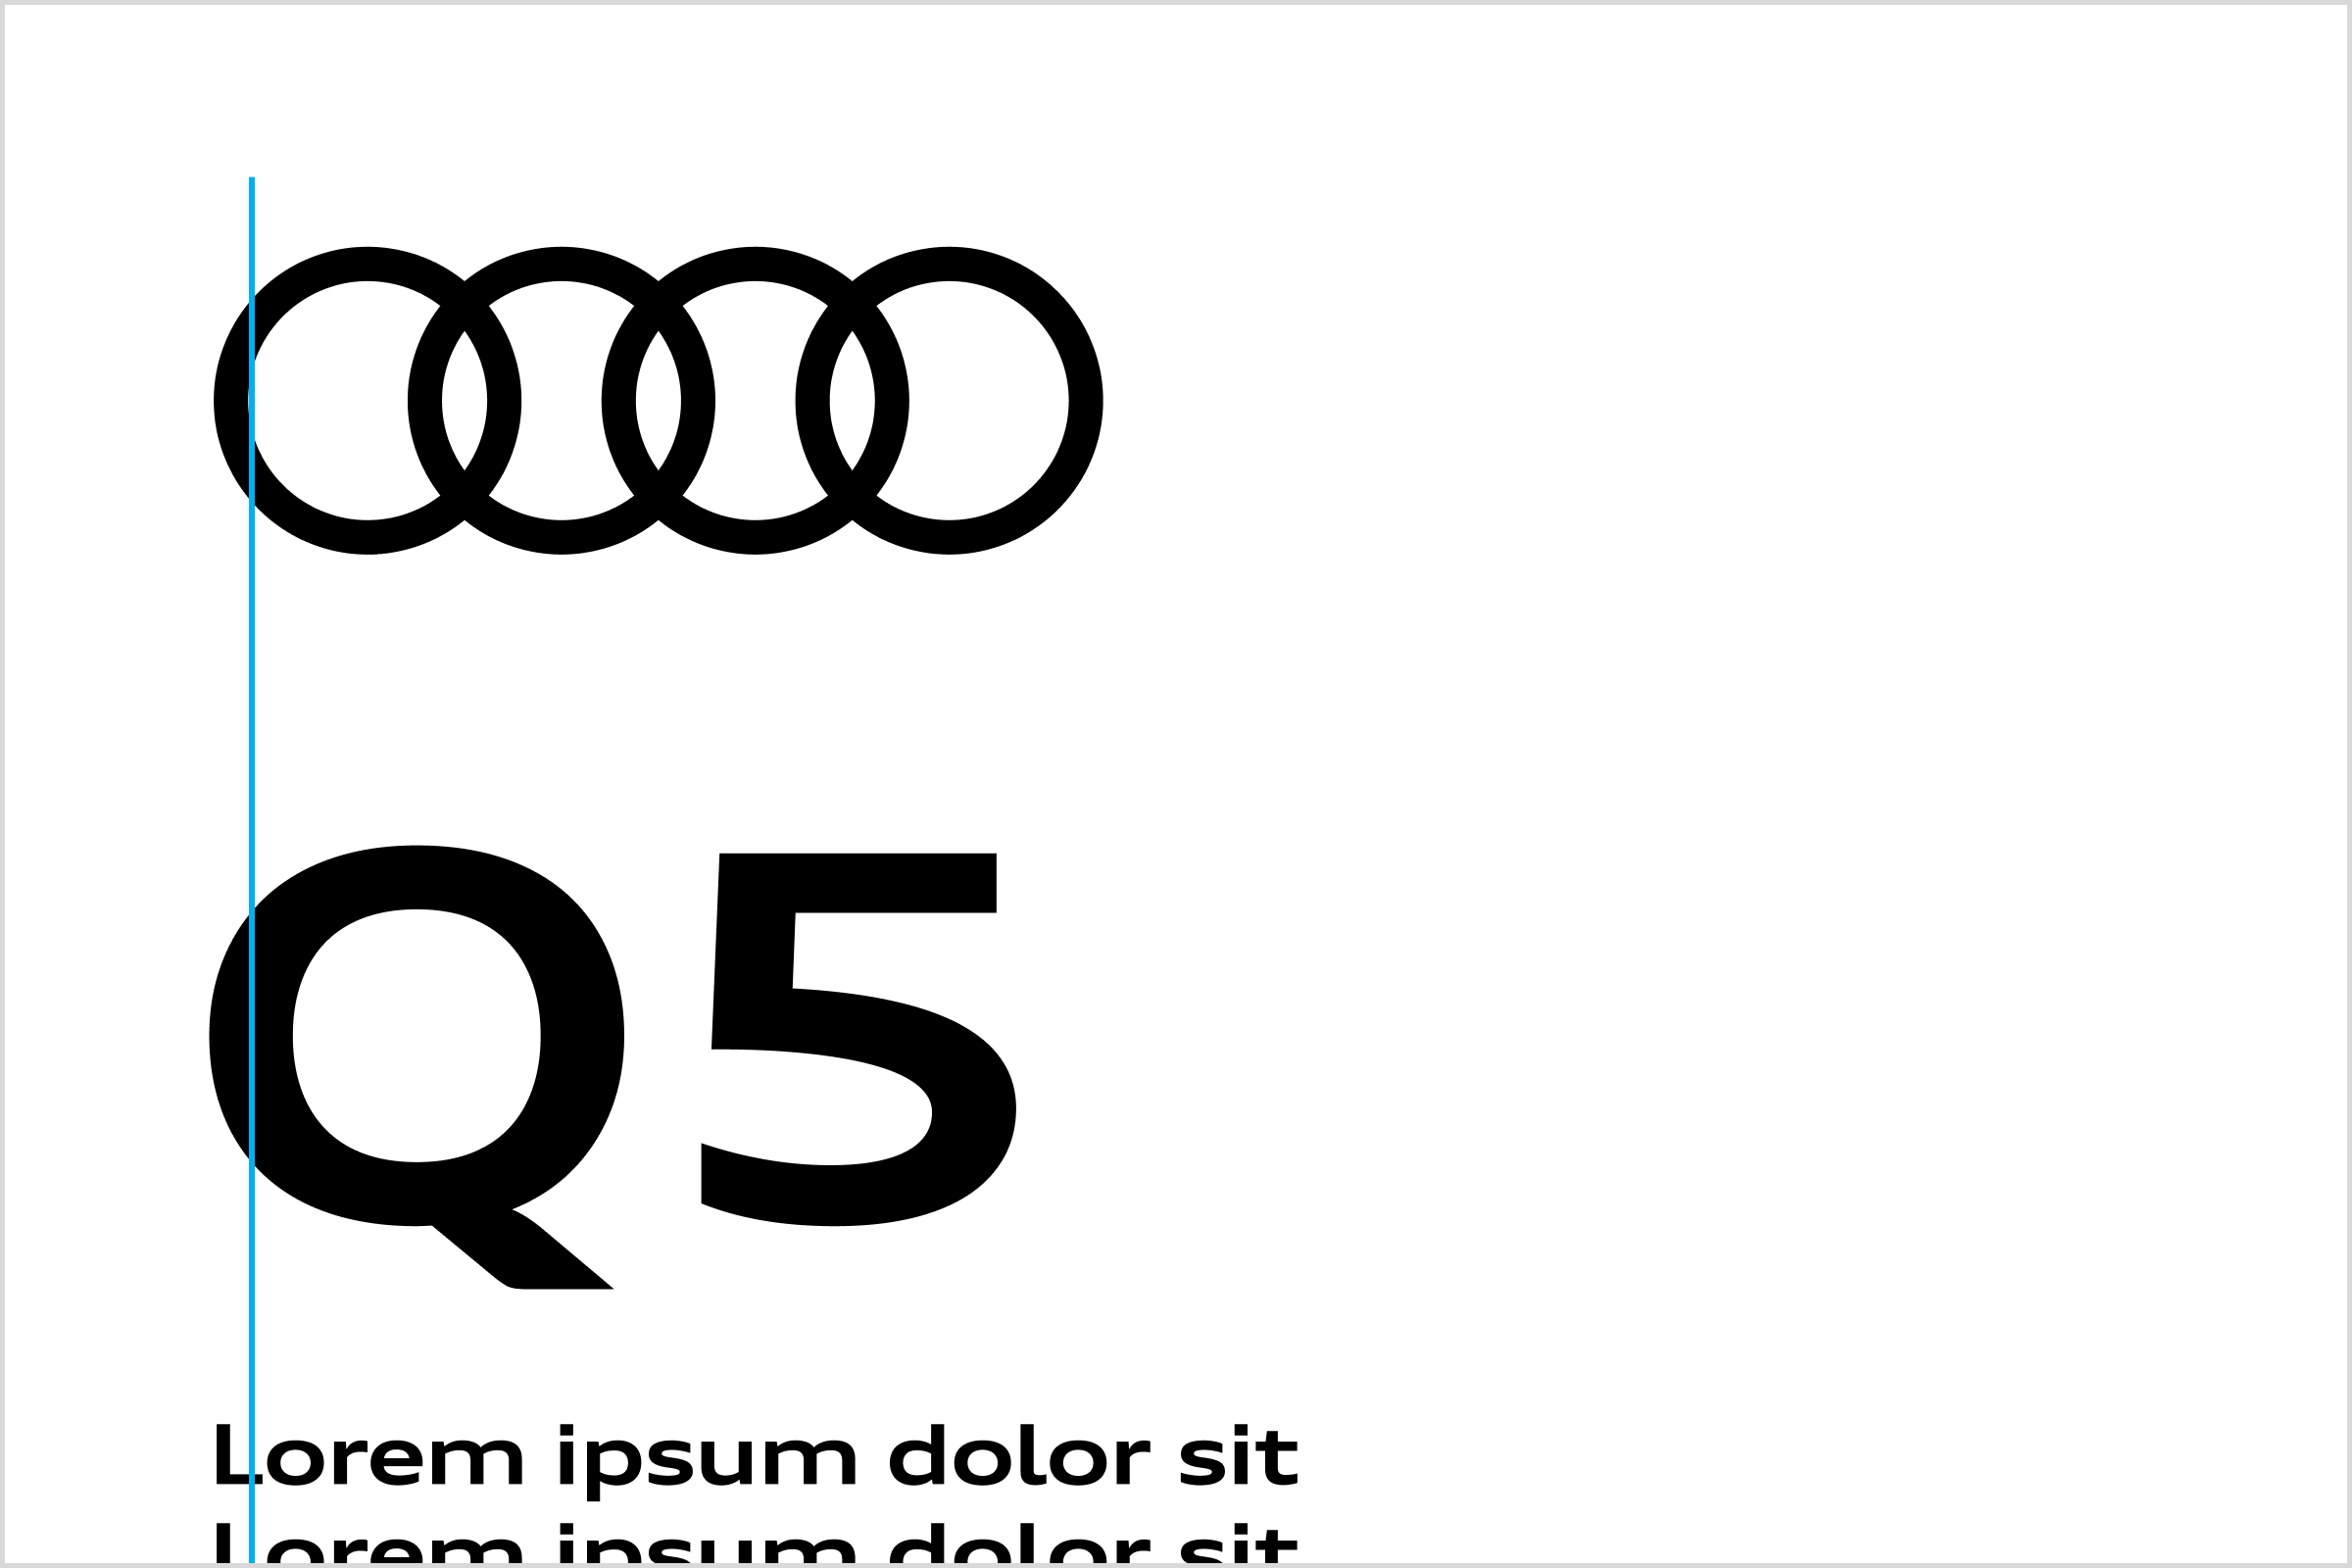 Audi Rings: Over 15 Royalty-Free Licensable Stock Vectors & Vector Art |  Shutterstock